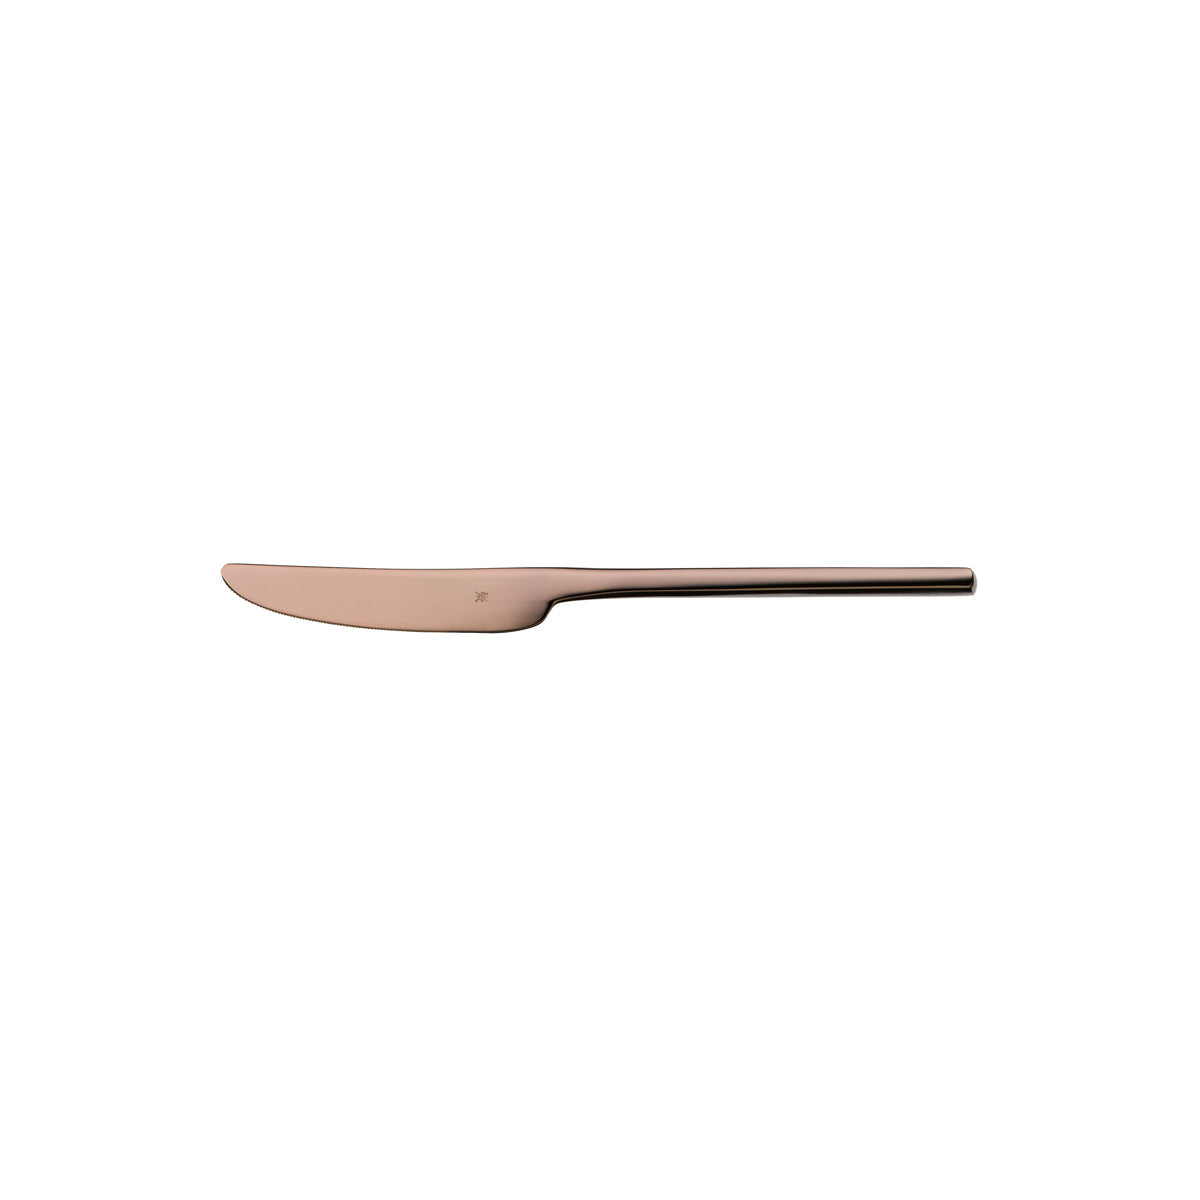 59.5303.8100 WMF Unic Table Knife Copper Tomkin Australia Hospitality Supplies